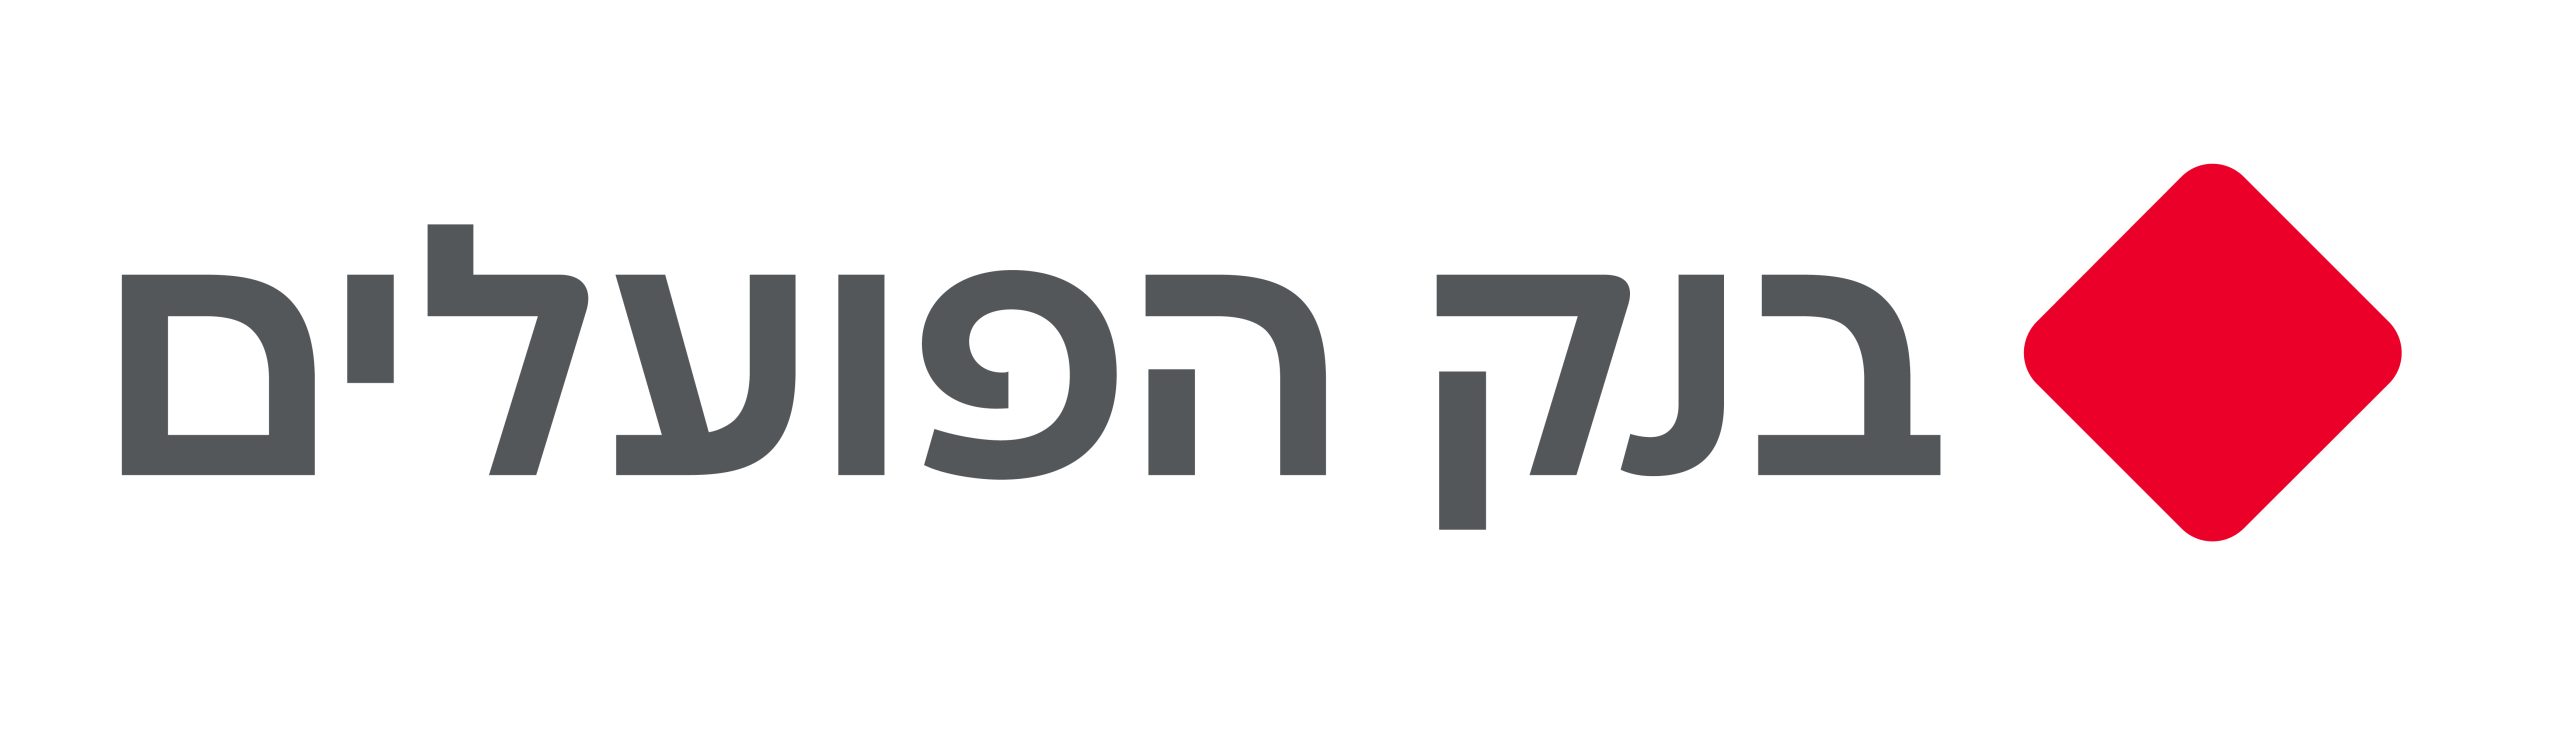 588x168 px logo